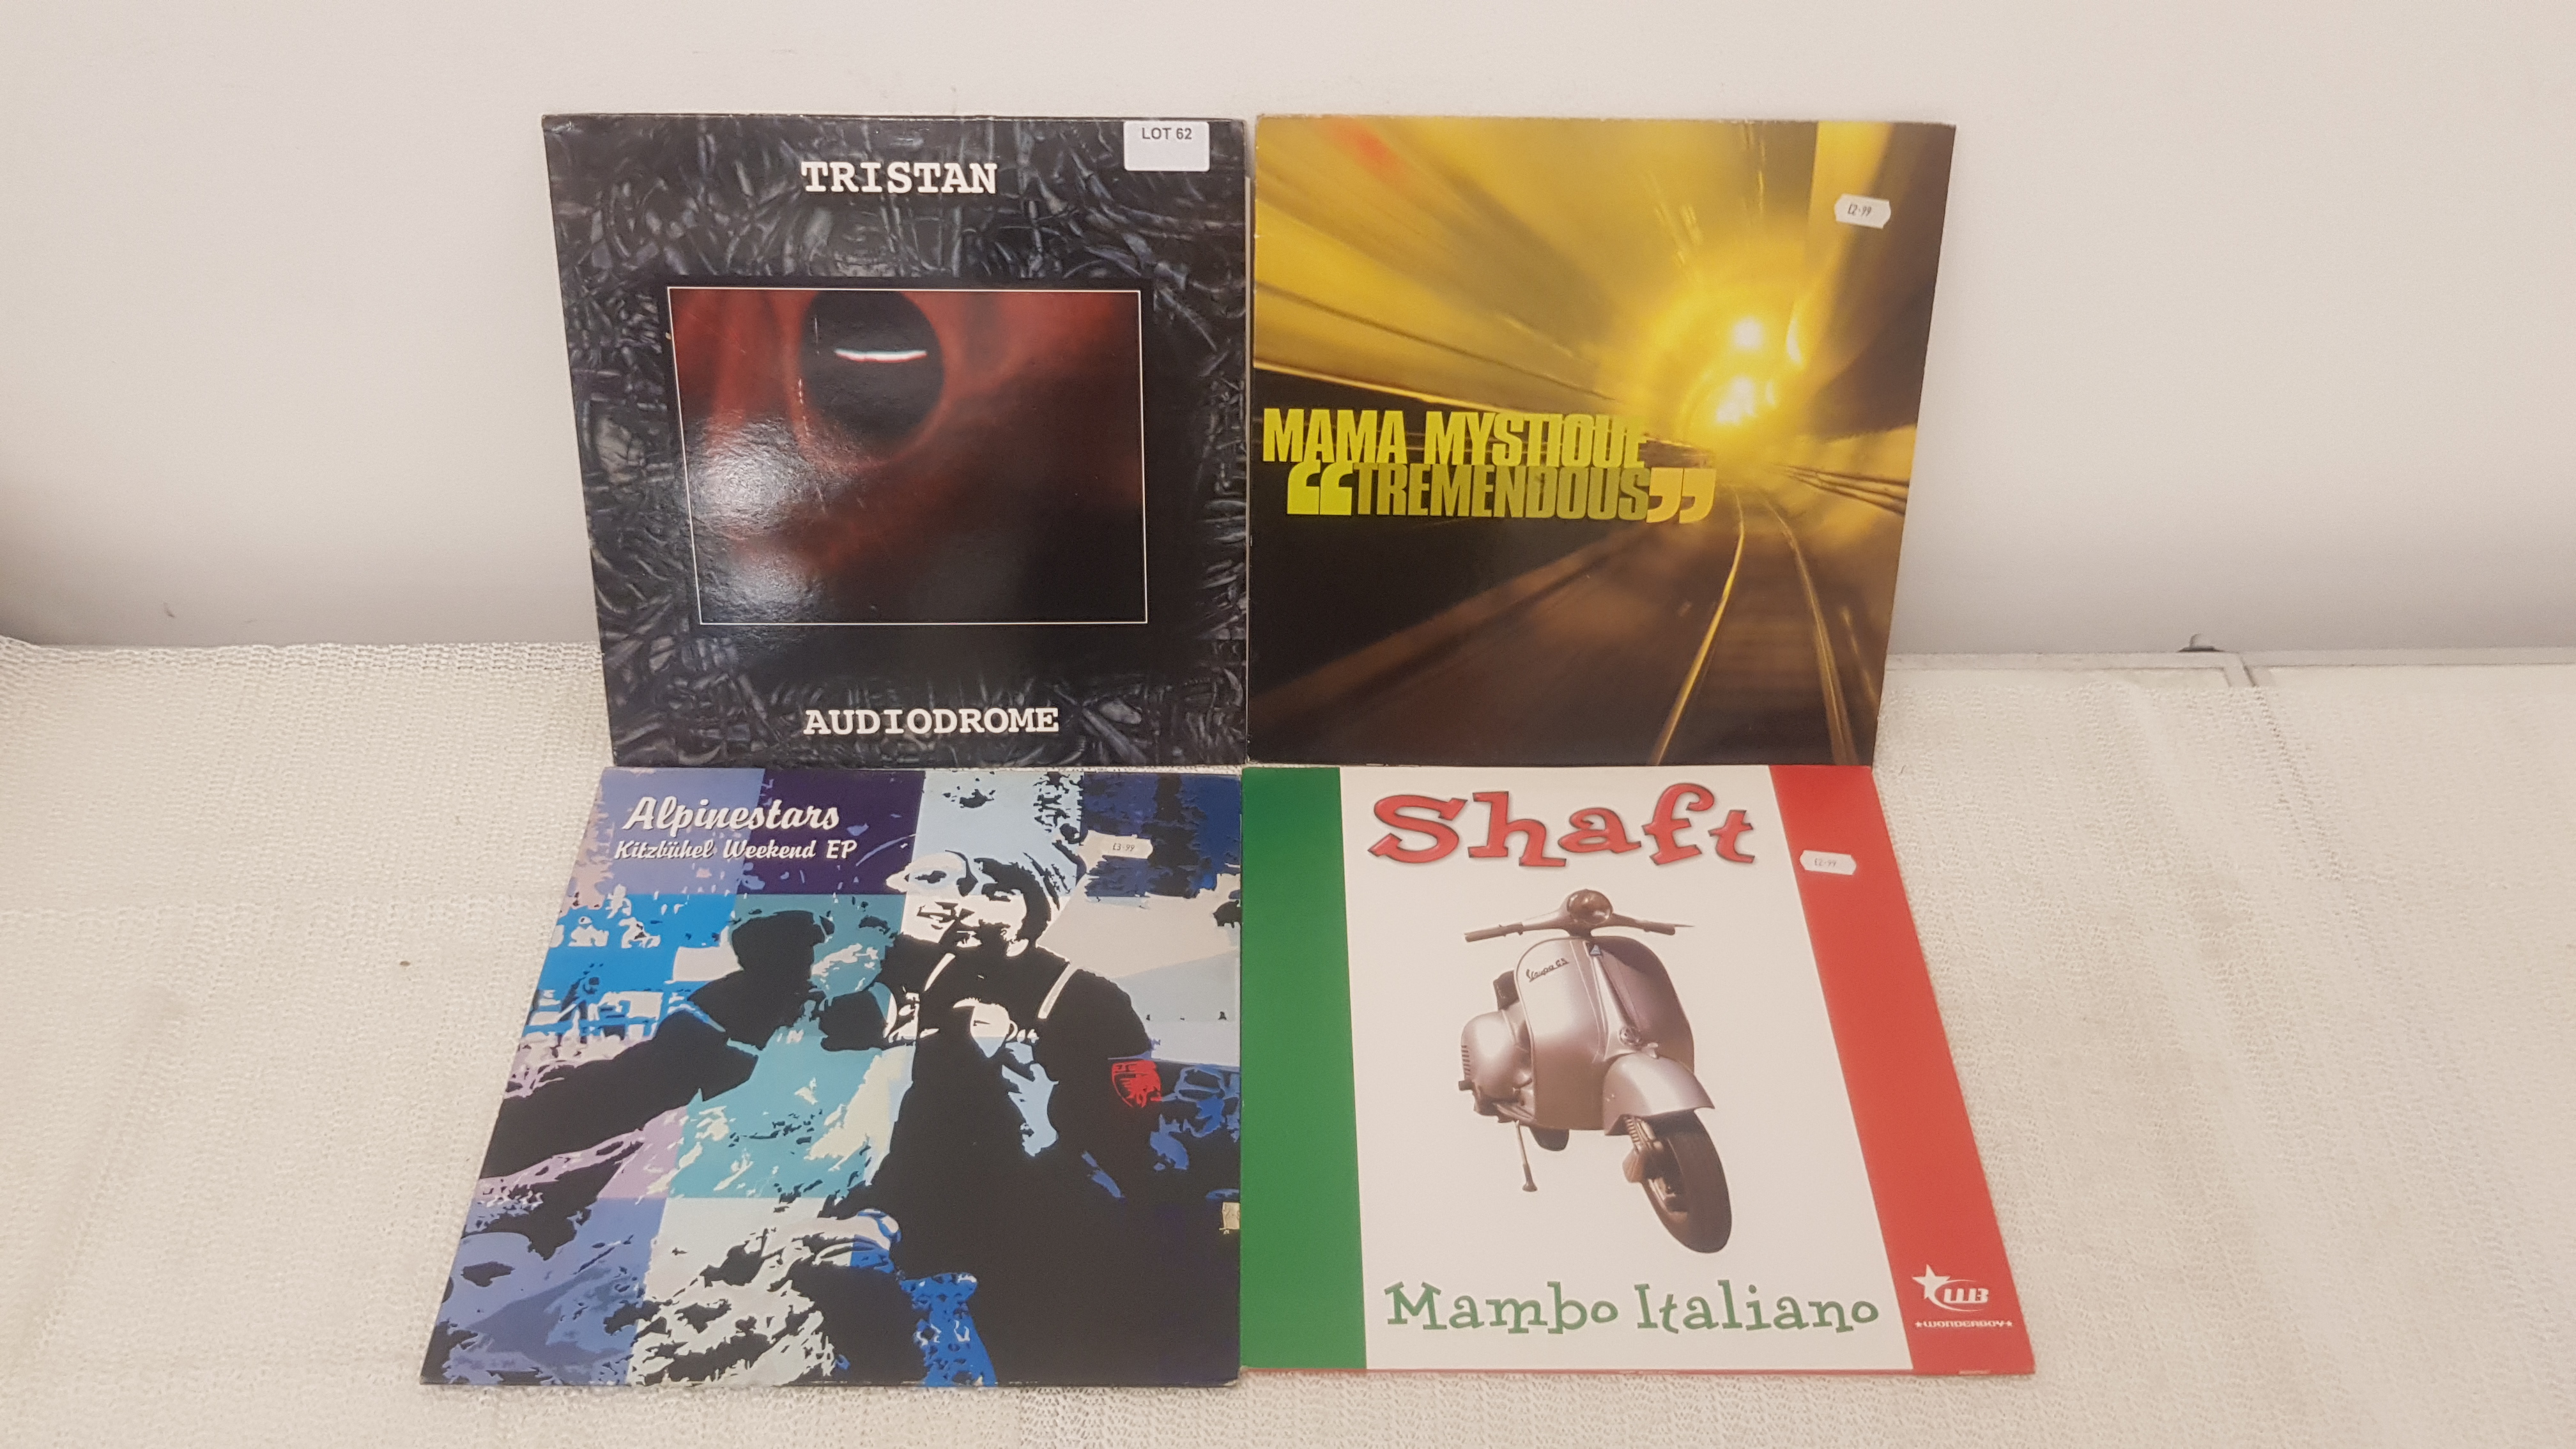 4 X 12" Vinyl. 1 X Tristan Audiodrome, 1 X Mama Mystique Tremendous. 1 X Alpinestars Kitzbuhel